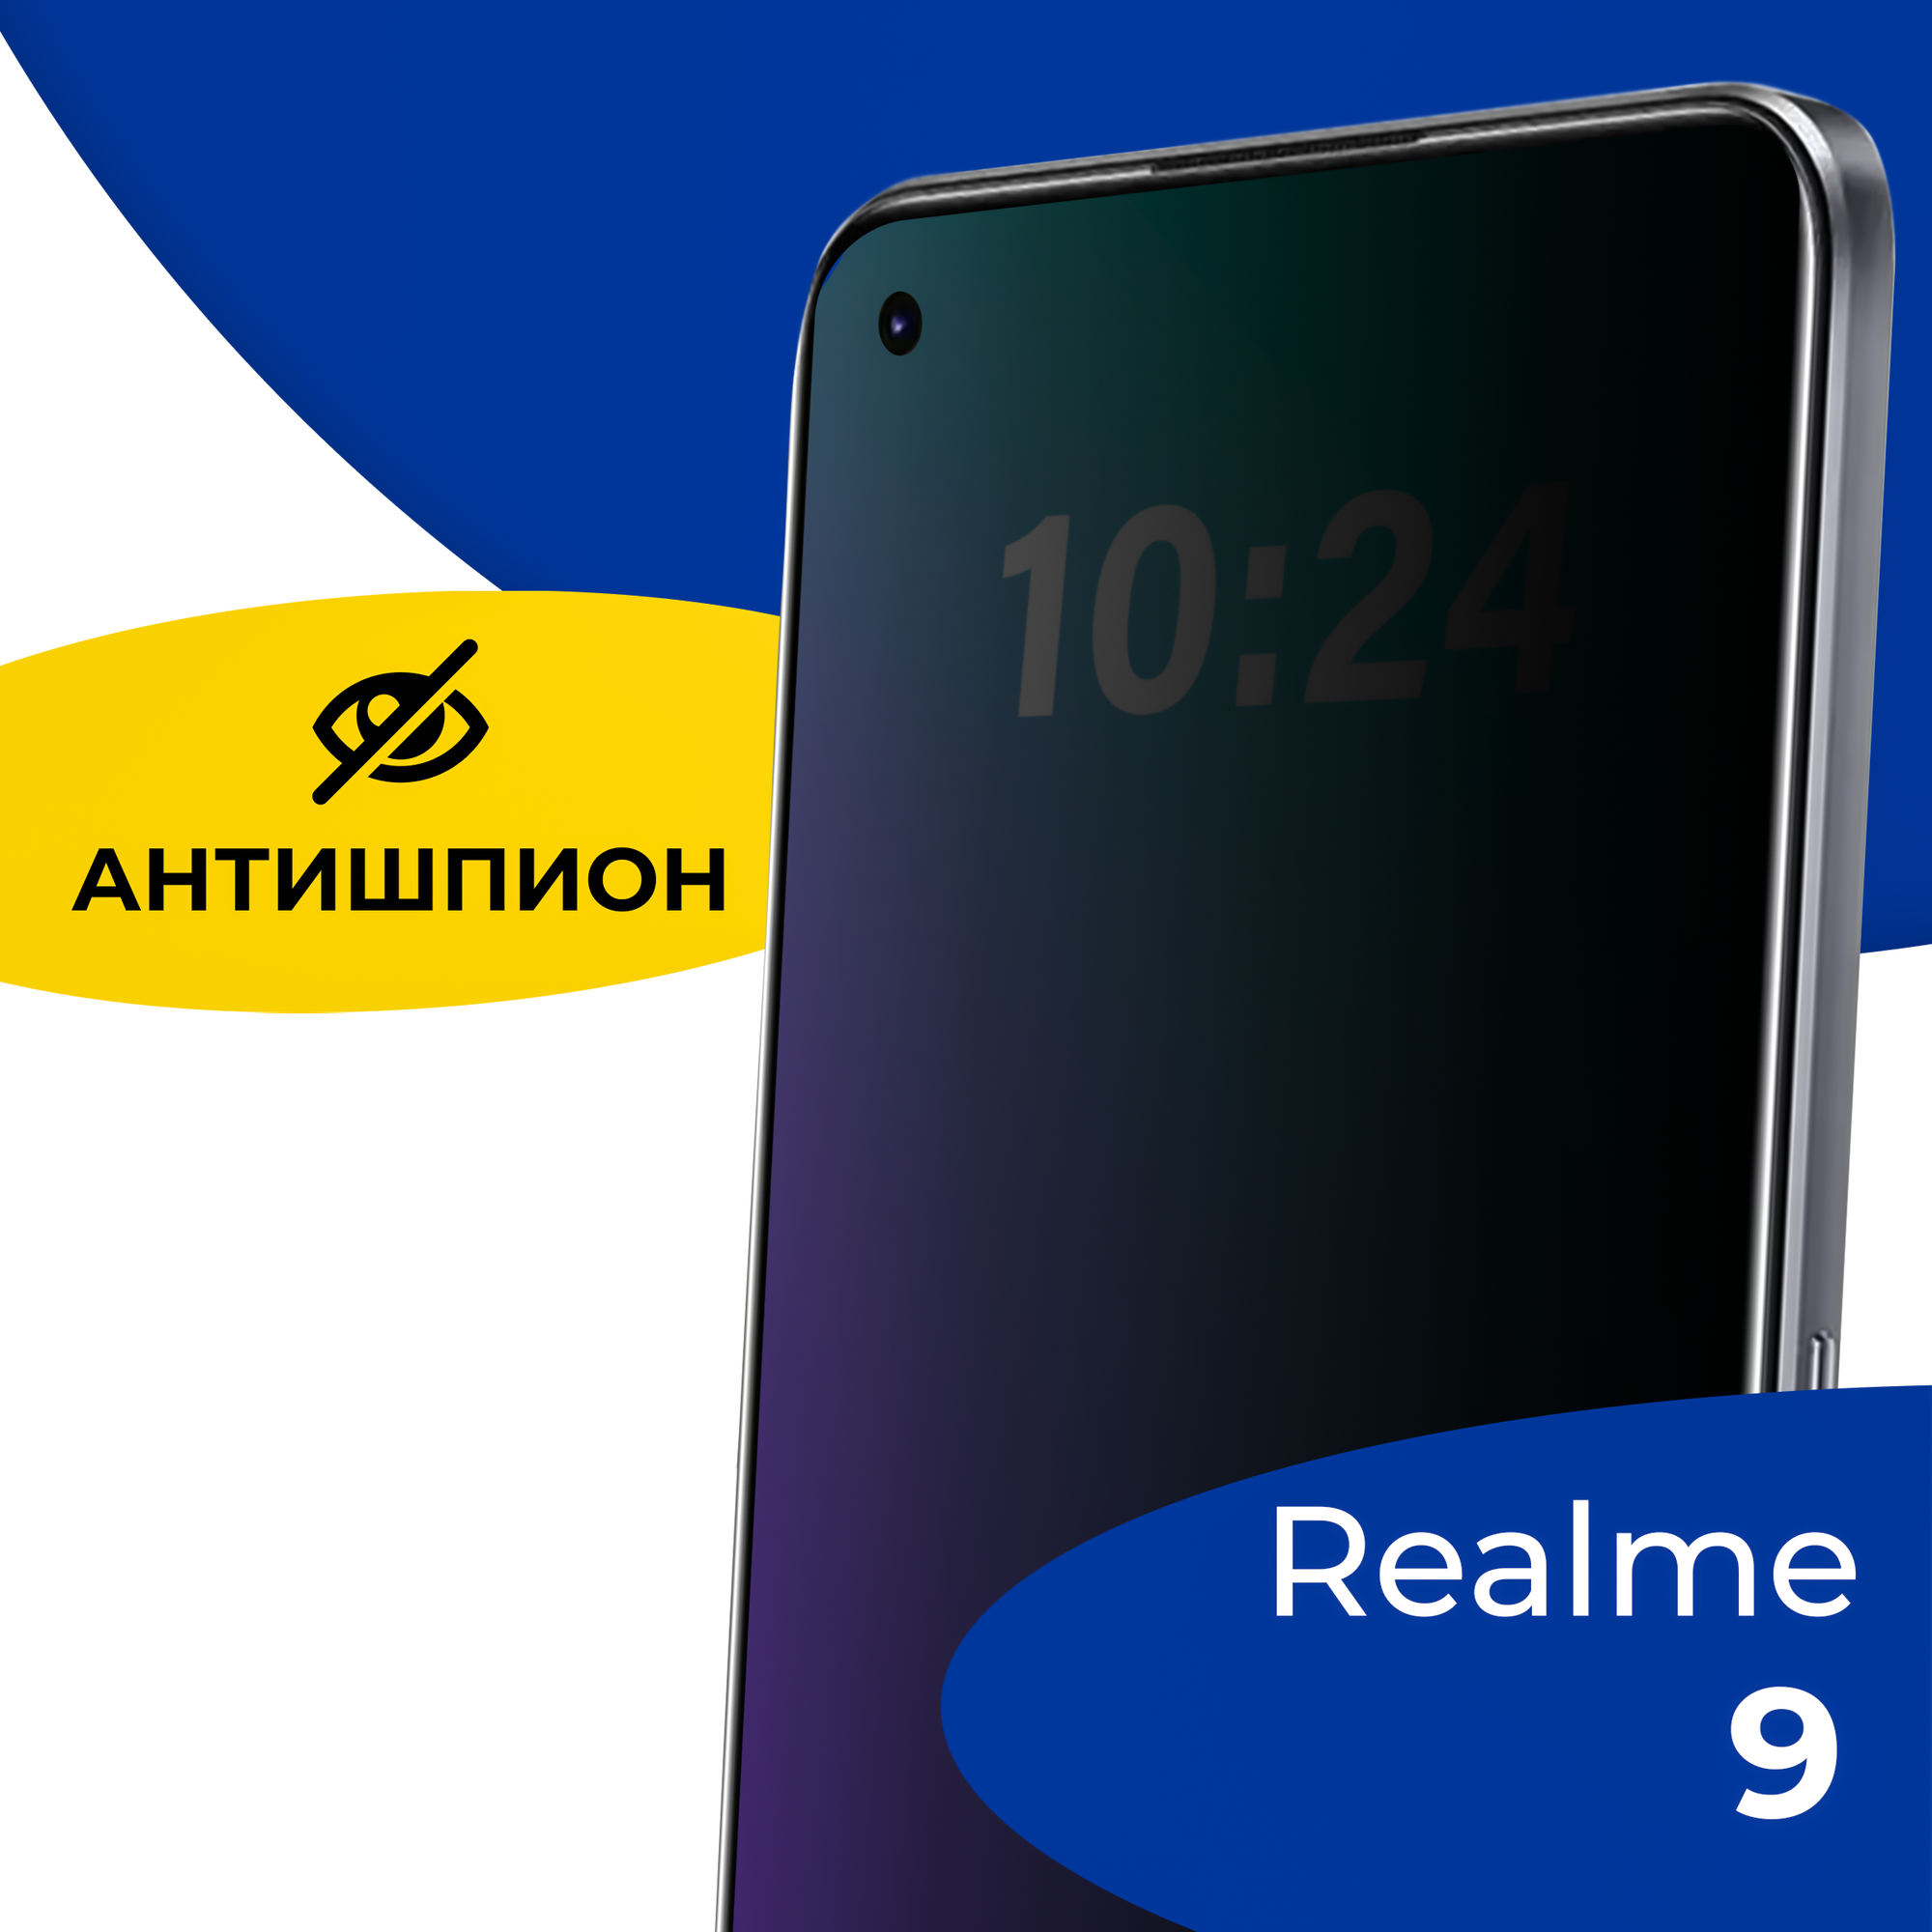 Защитное стекло Антишпион для телефона Realme 9 / Противоударное полноэкранное стекло 5D на смартфон Реалми 9 / Черное